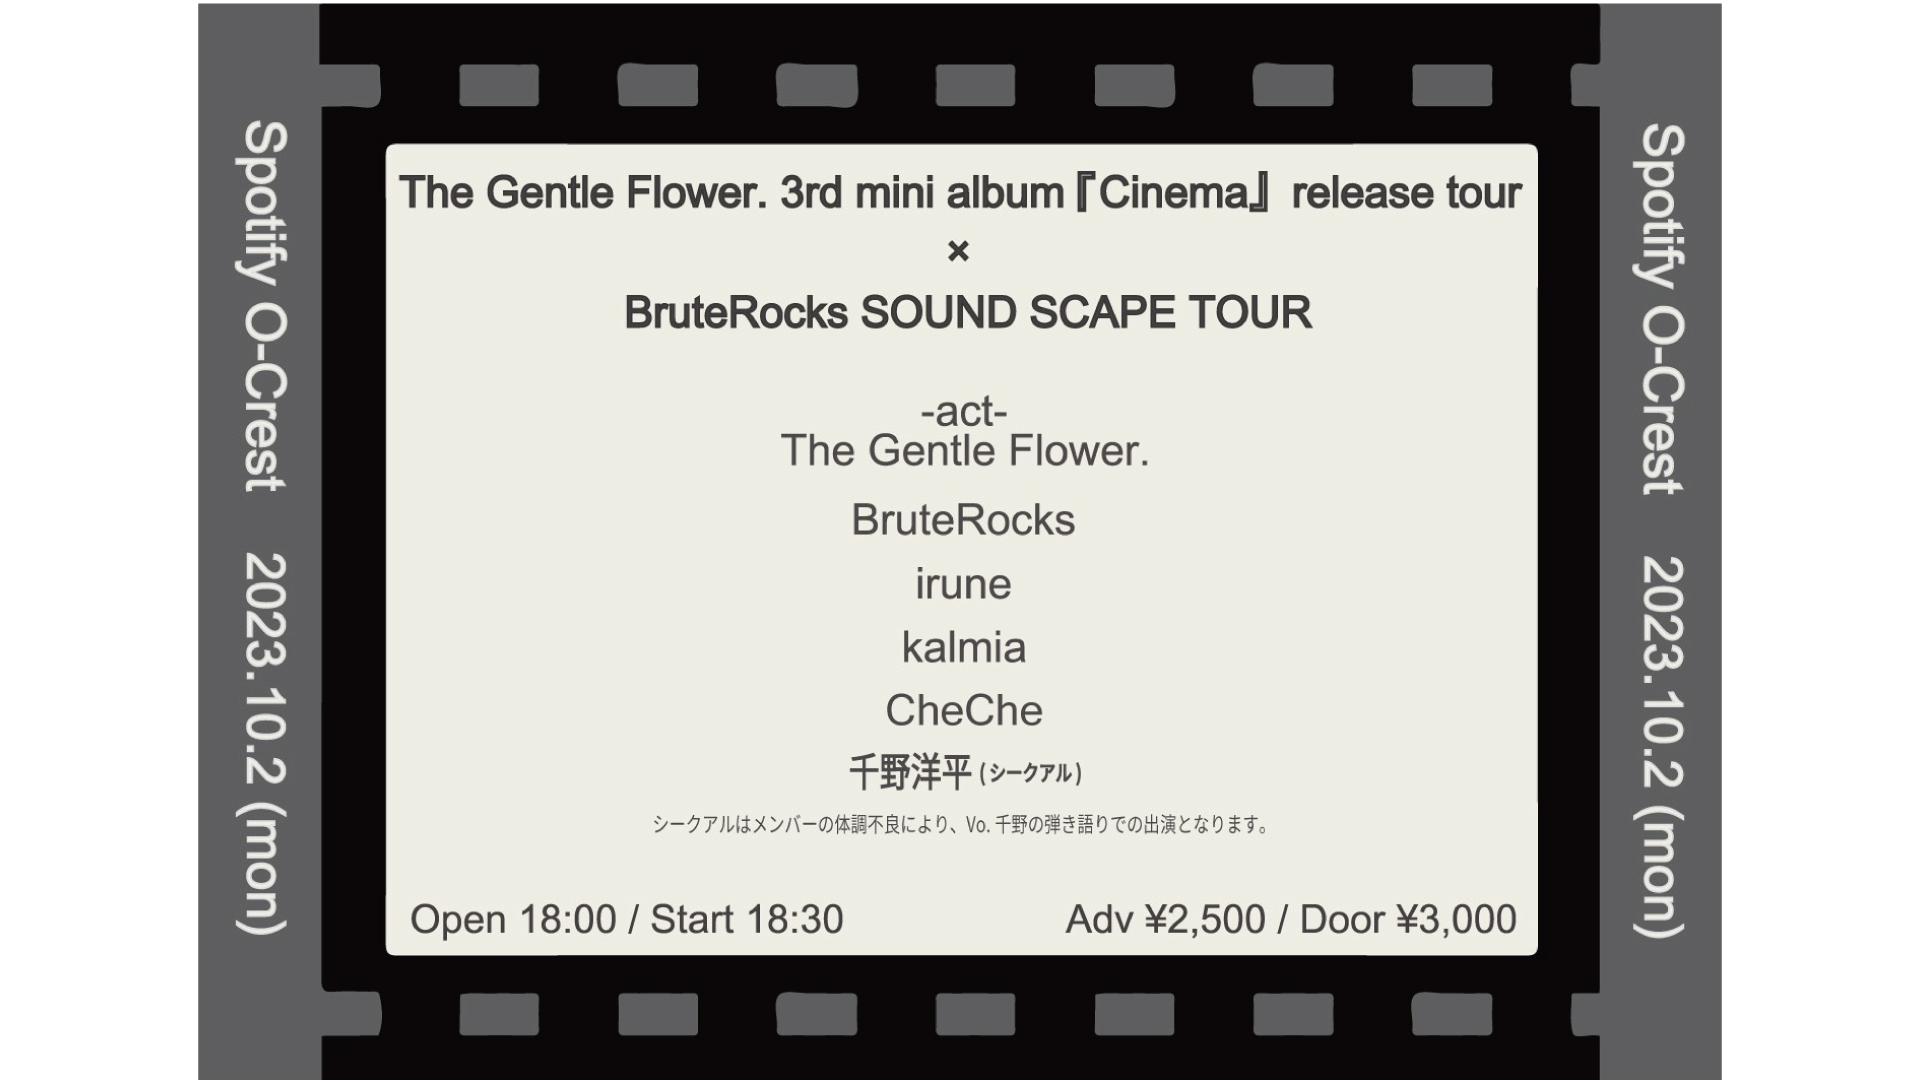 The Gentle Flower. BruteRocks irune シークアル kalmia_23/10/2